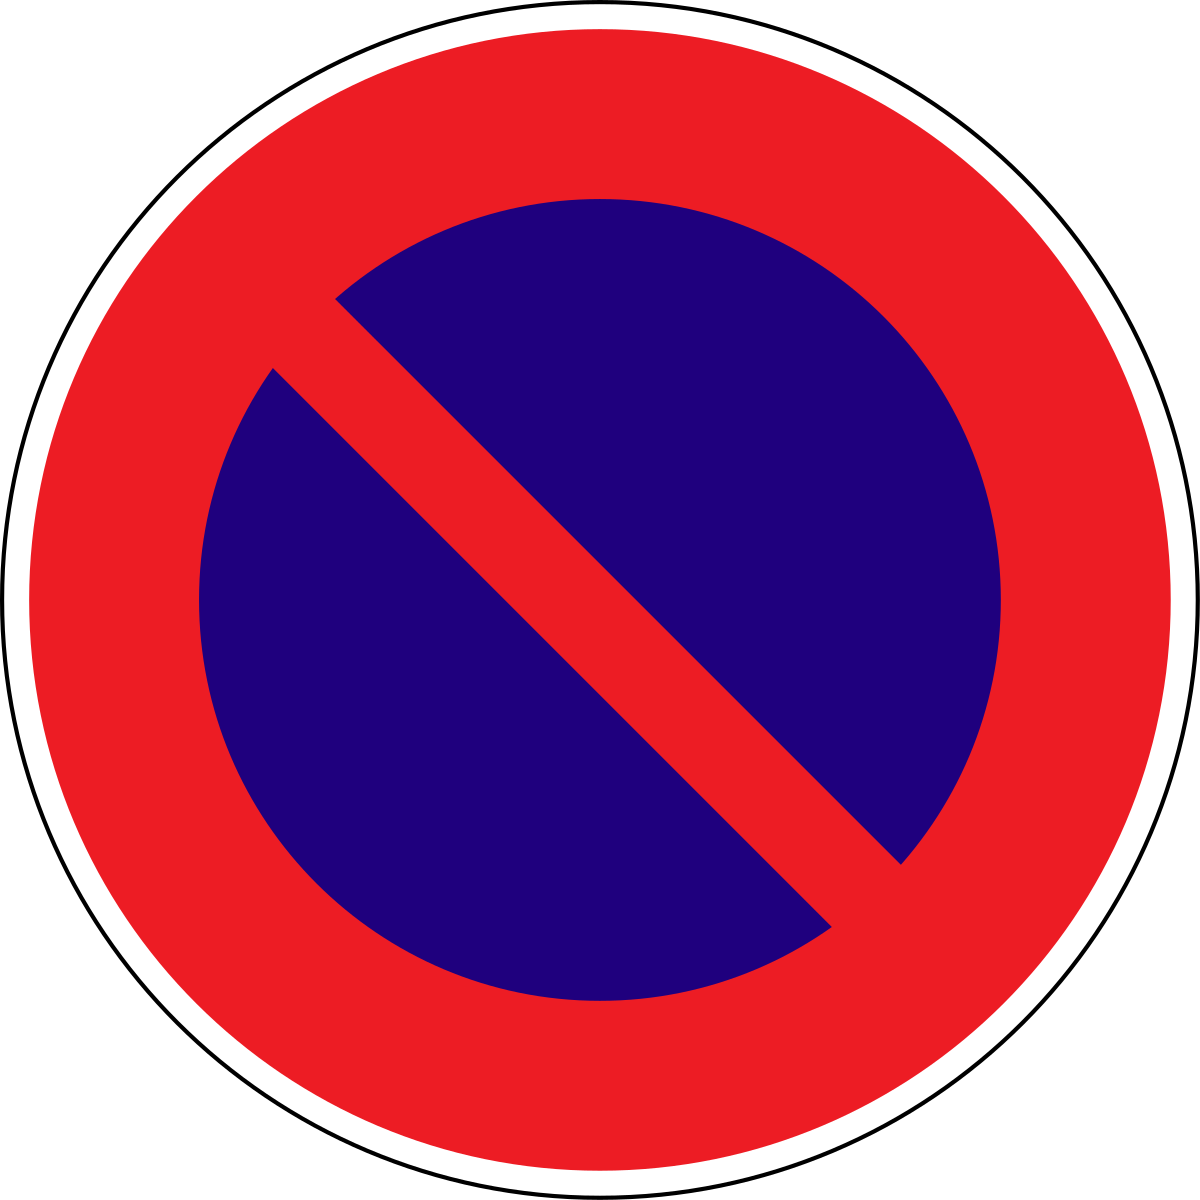 Знак 3 28 стоянка запрещена: Знак 3.28 Стоянка запрещена с пояснениями